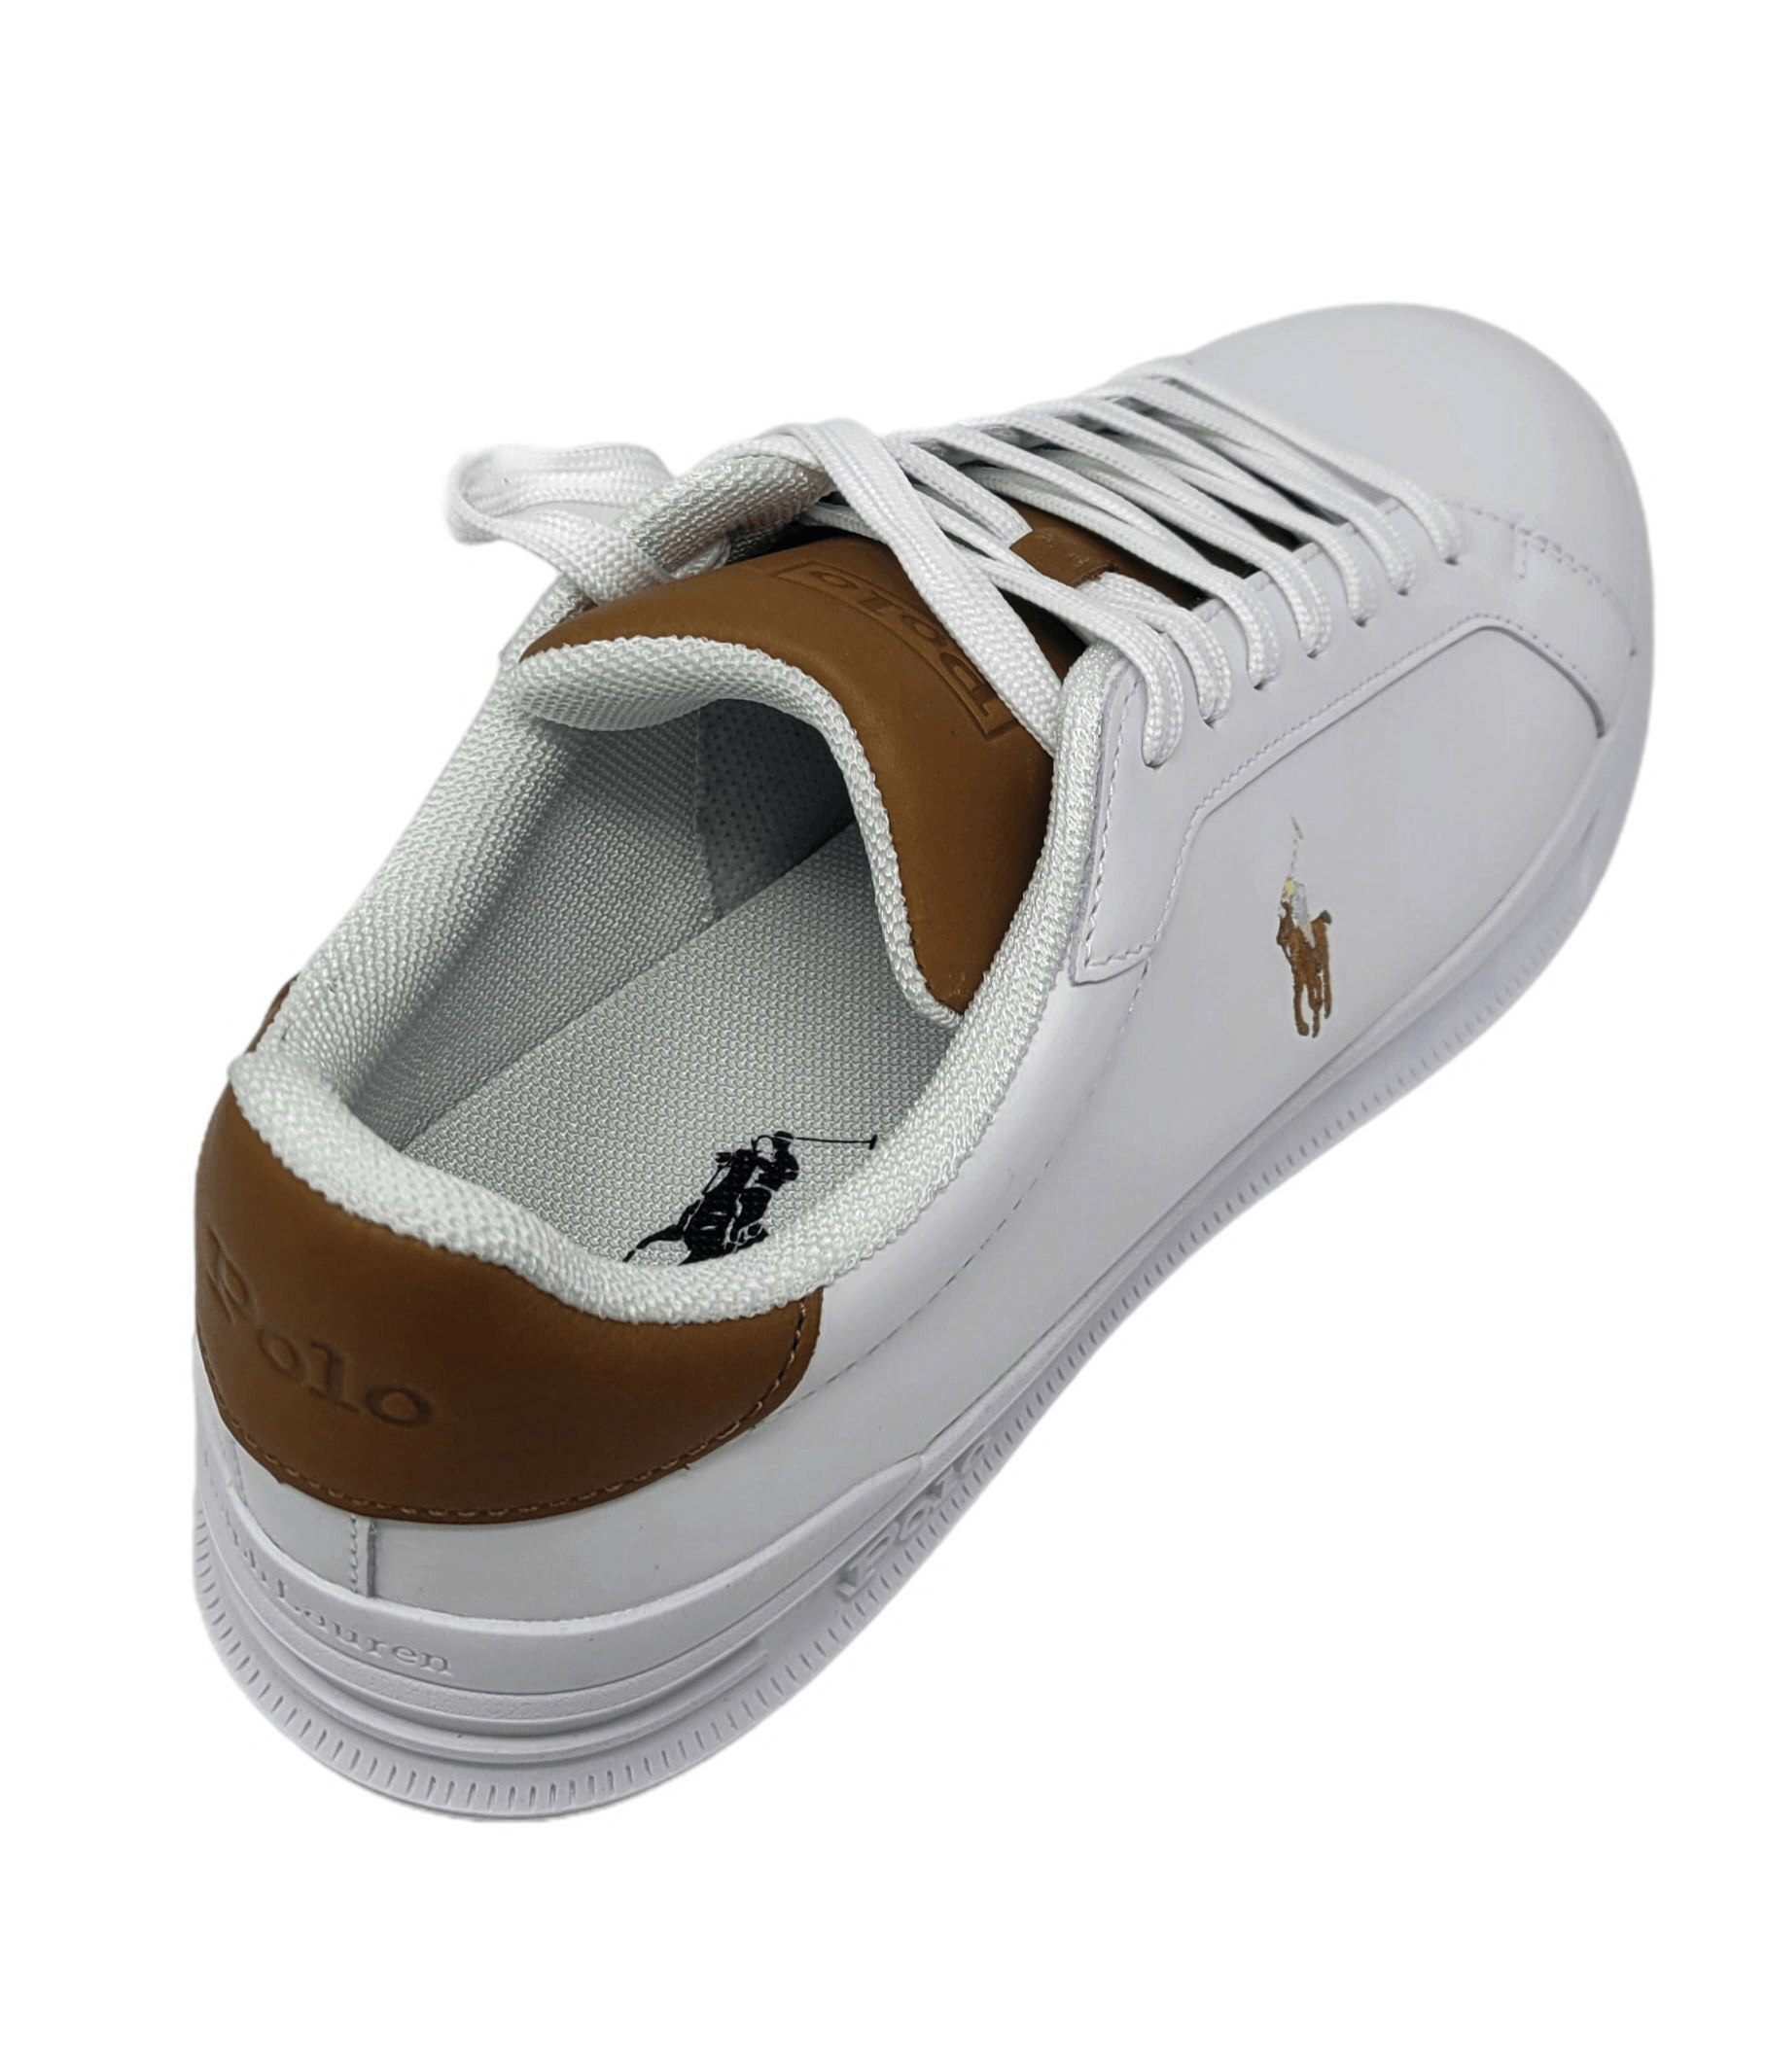 Laflamme- Soulier sneakers en cuir blanc - Ralph lauren